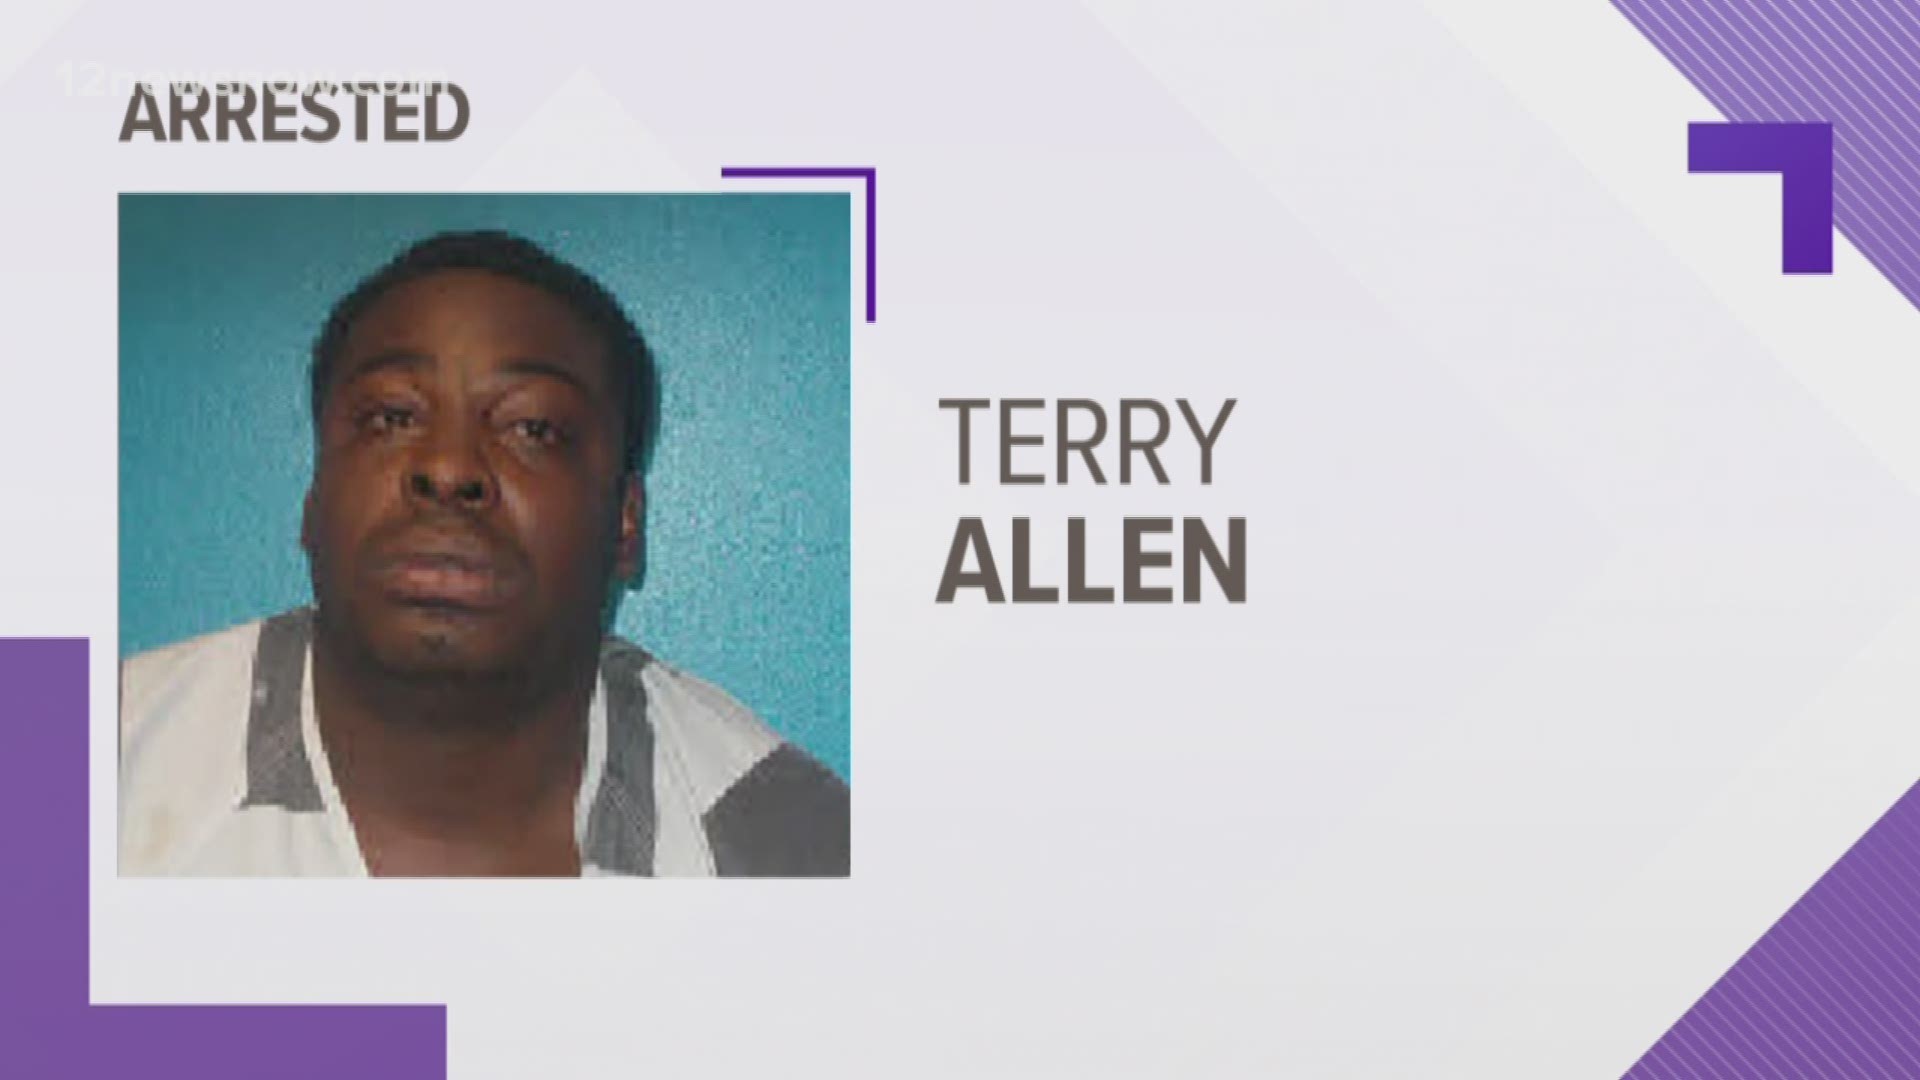 Terry Allen is in the Hardin County Jail